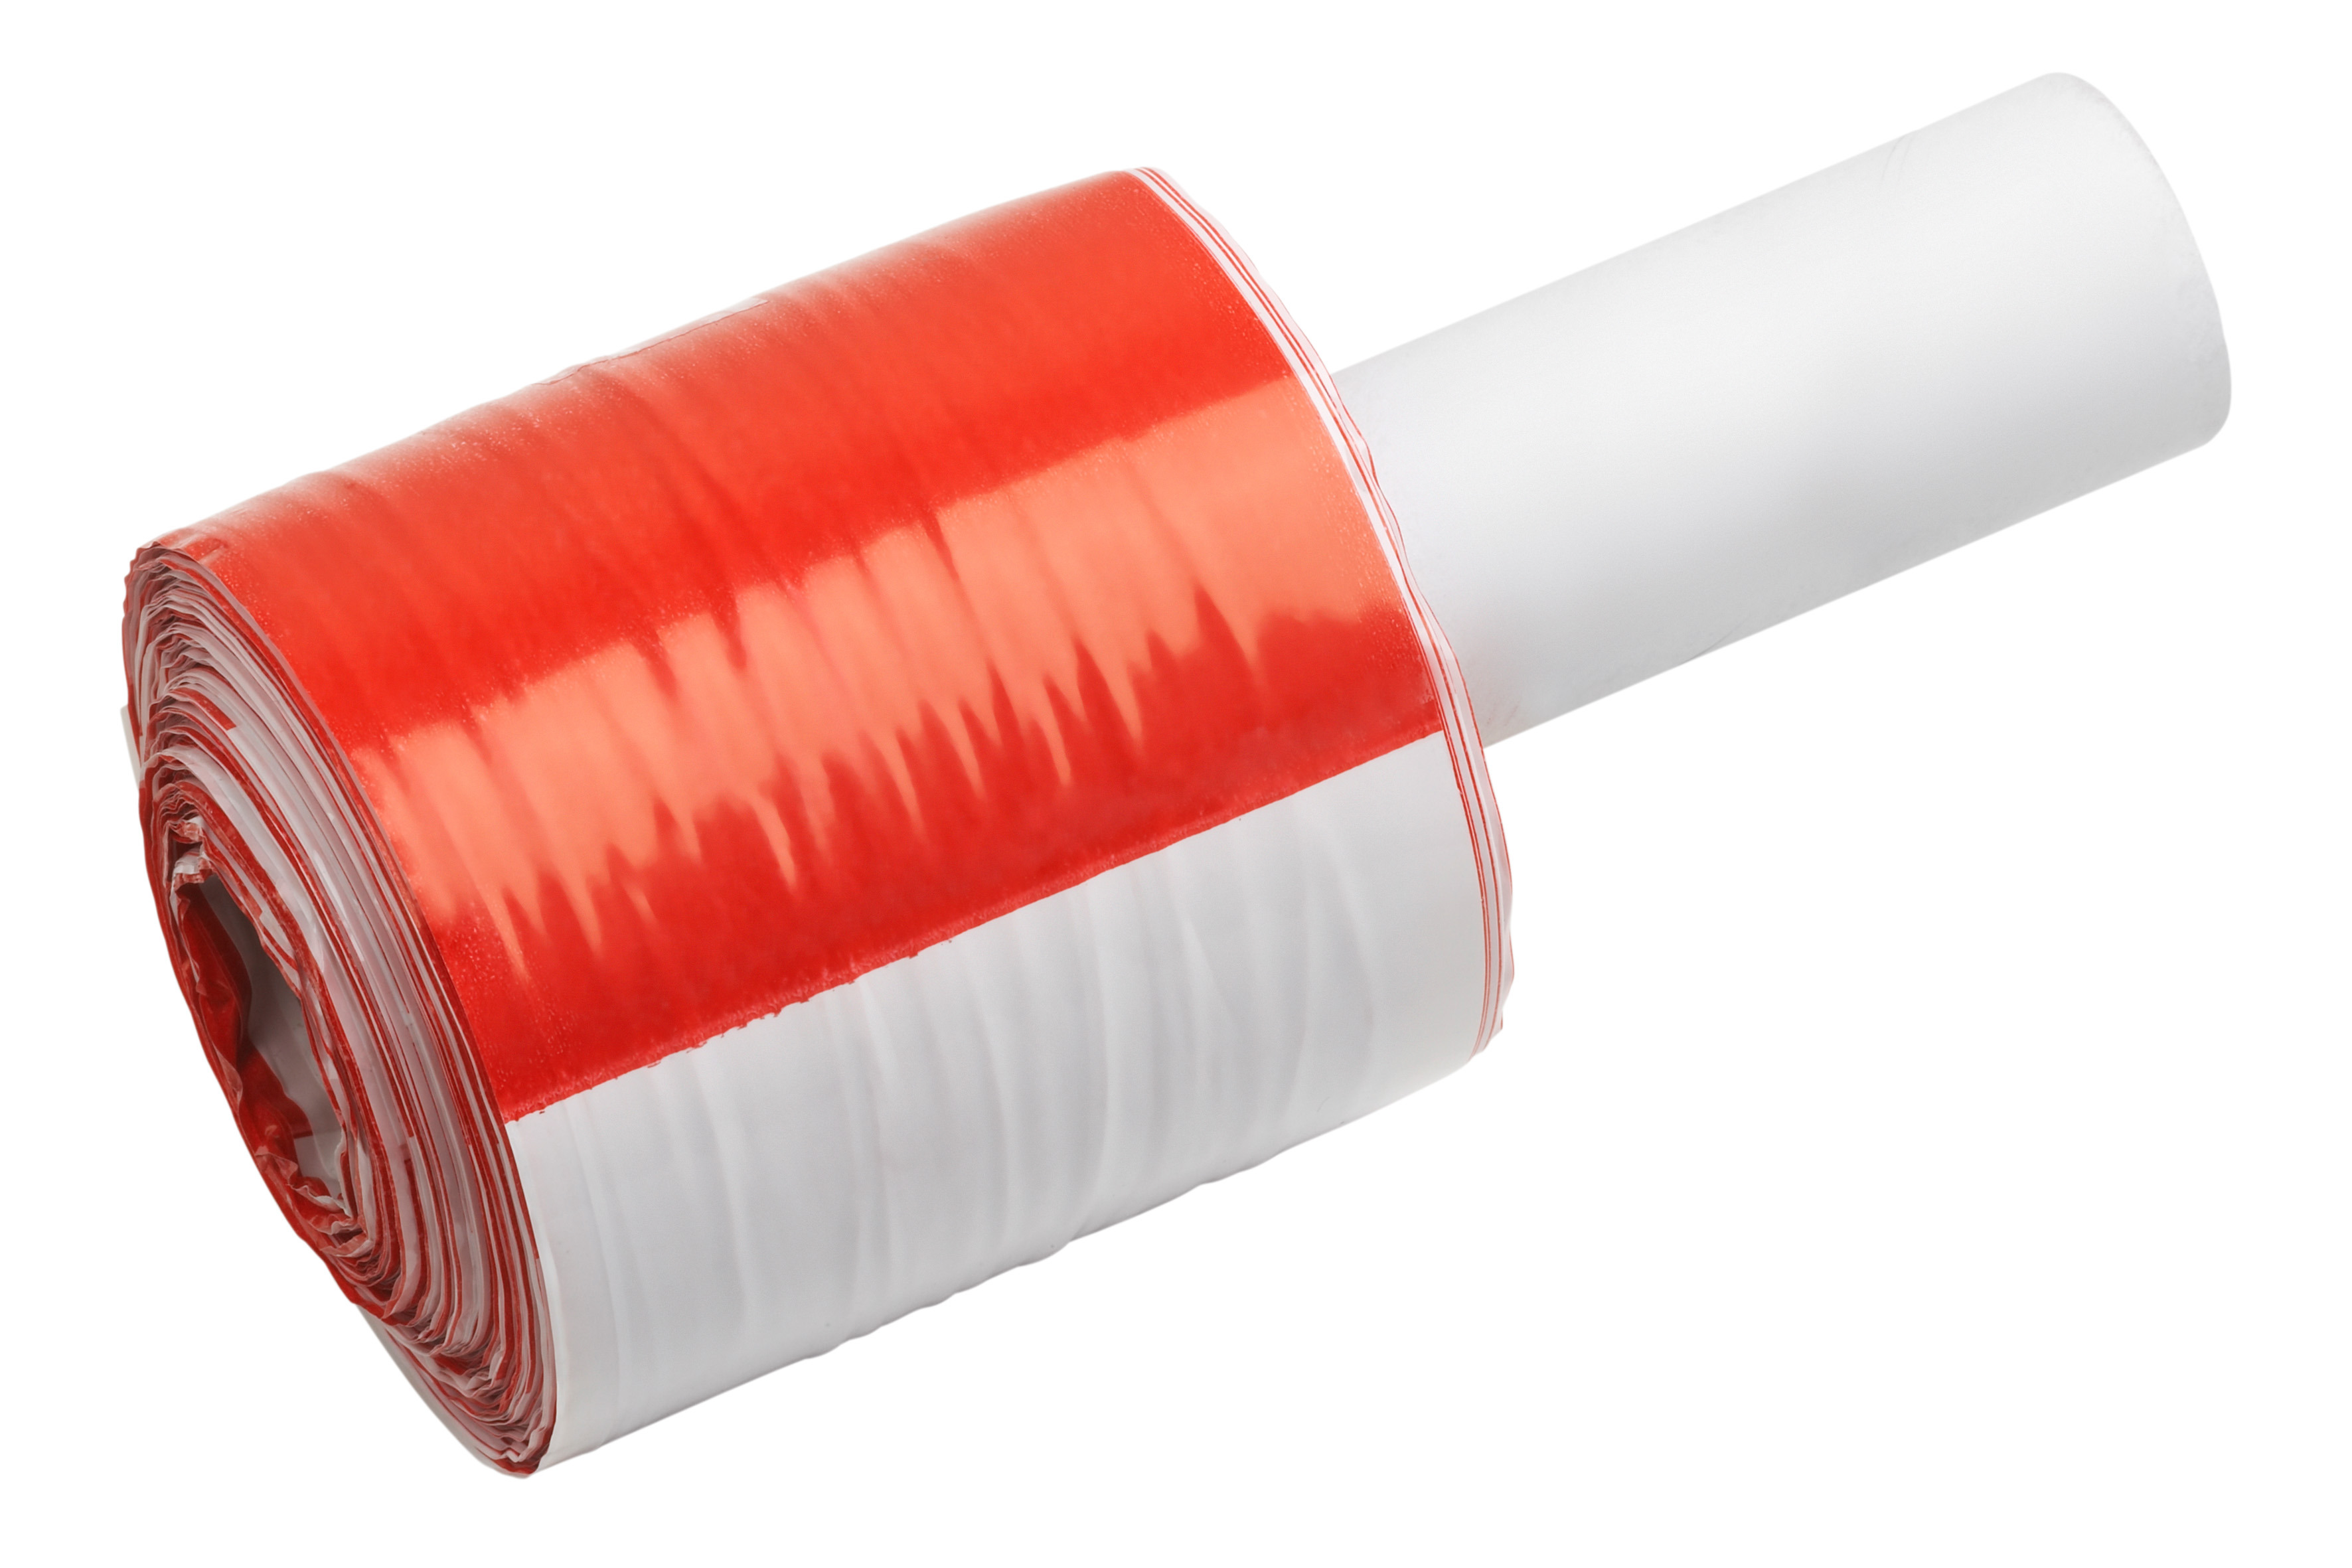 Kelmaplast Absperrband Rot/Weiß, Folie, 80 mm × 100 m